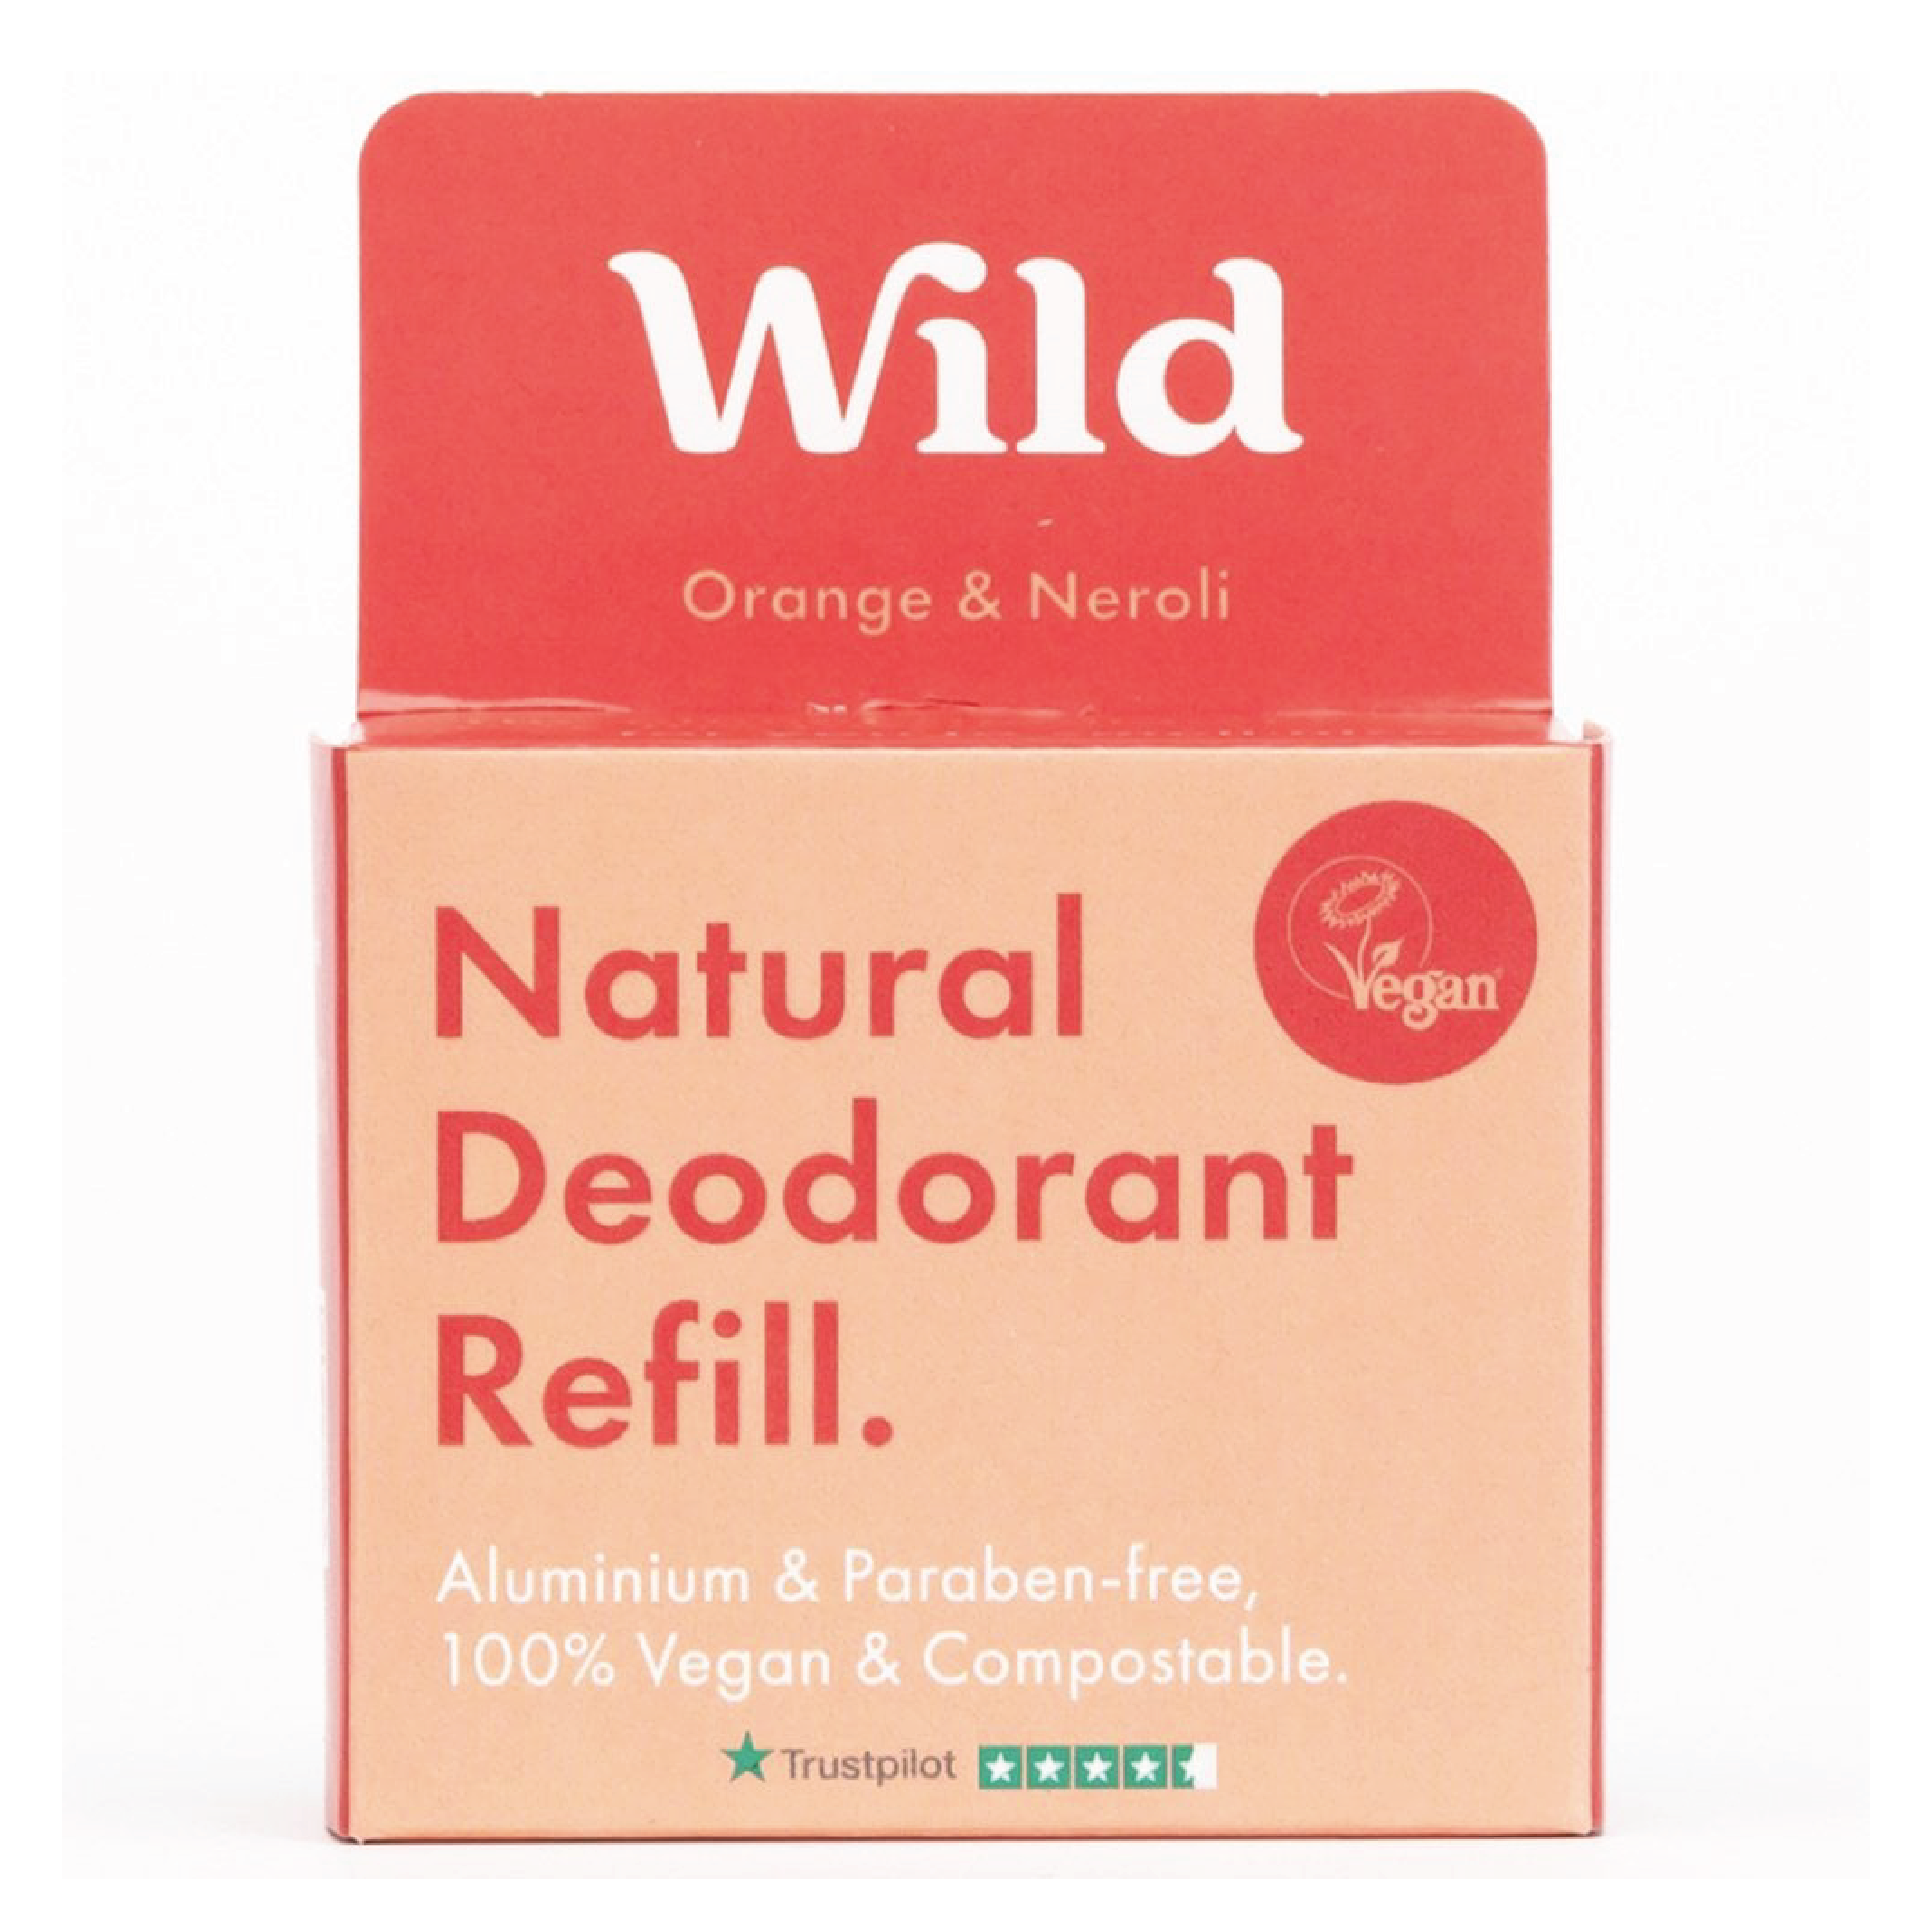 Wild Wild Deo Orange & Neroli refill, 40 gram